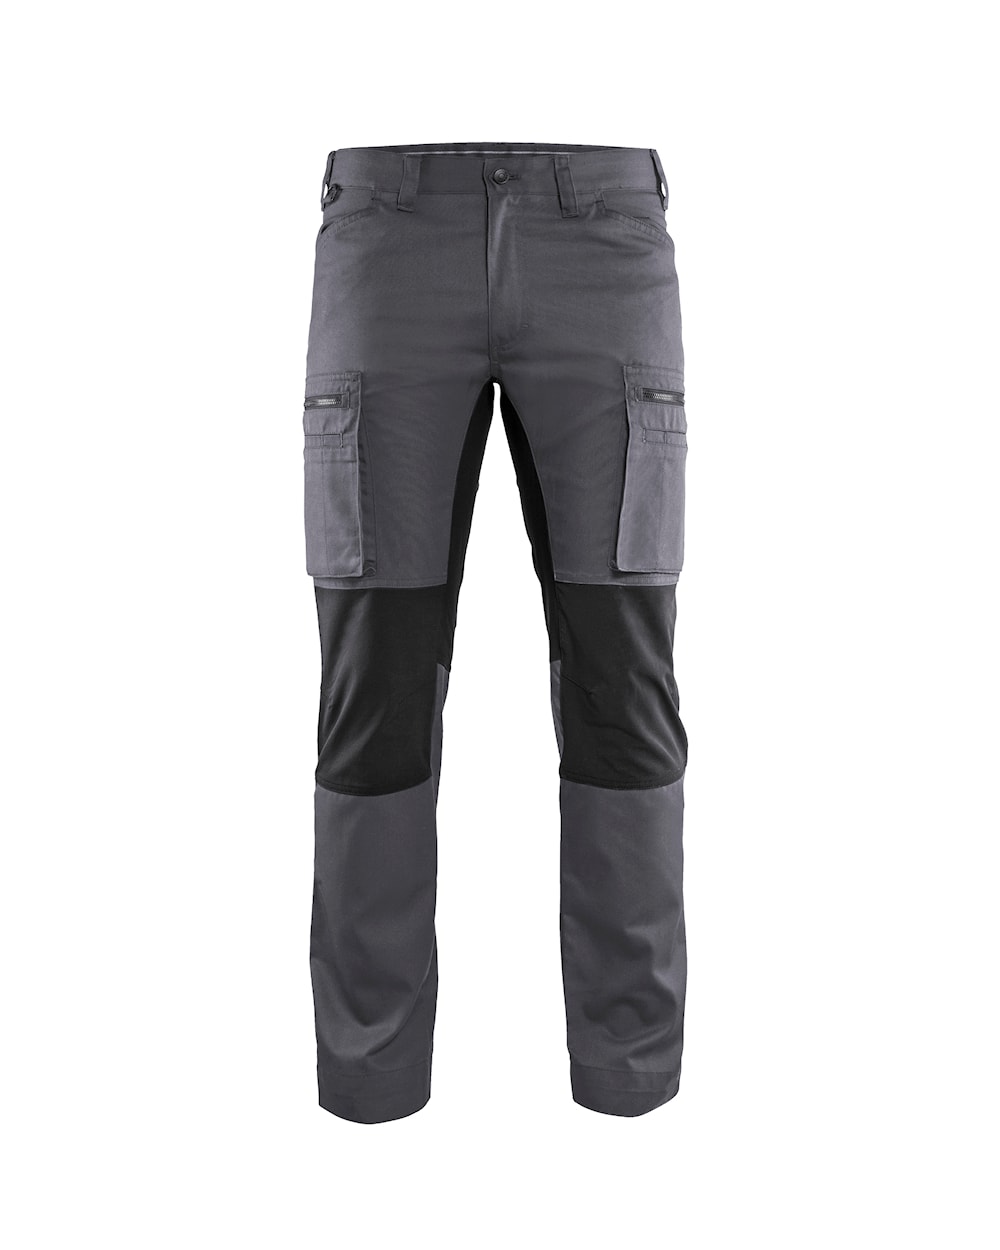 Blaklader 1655 5oz Service Pants with Stretch - 9699 Grey/Black